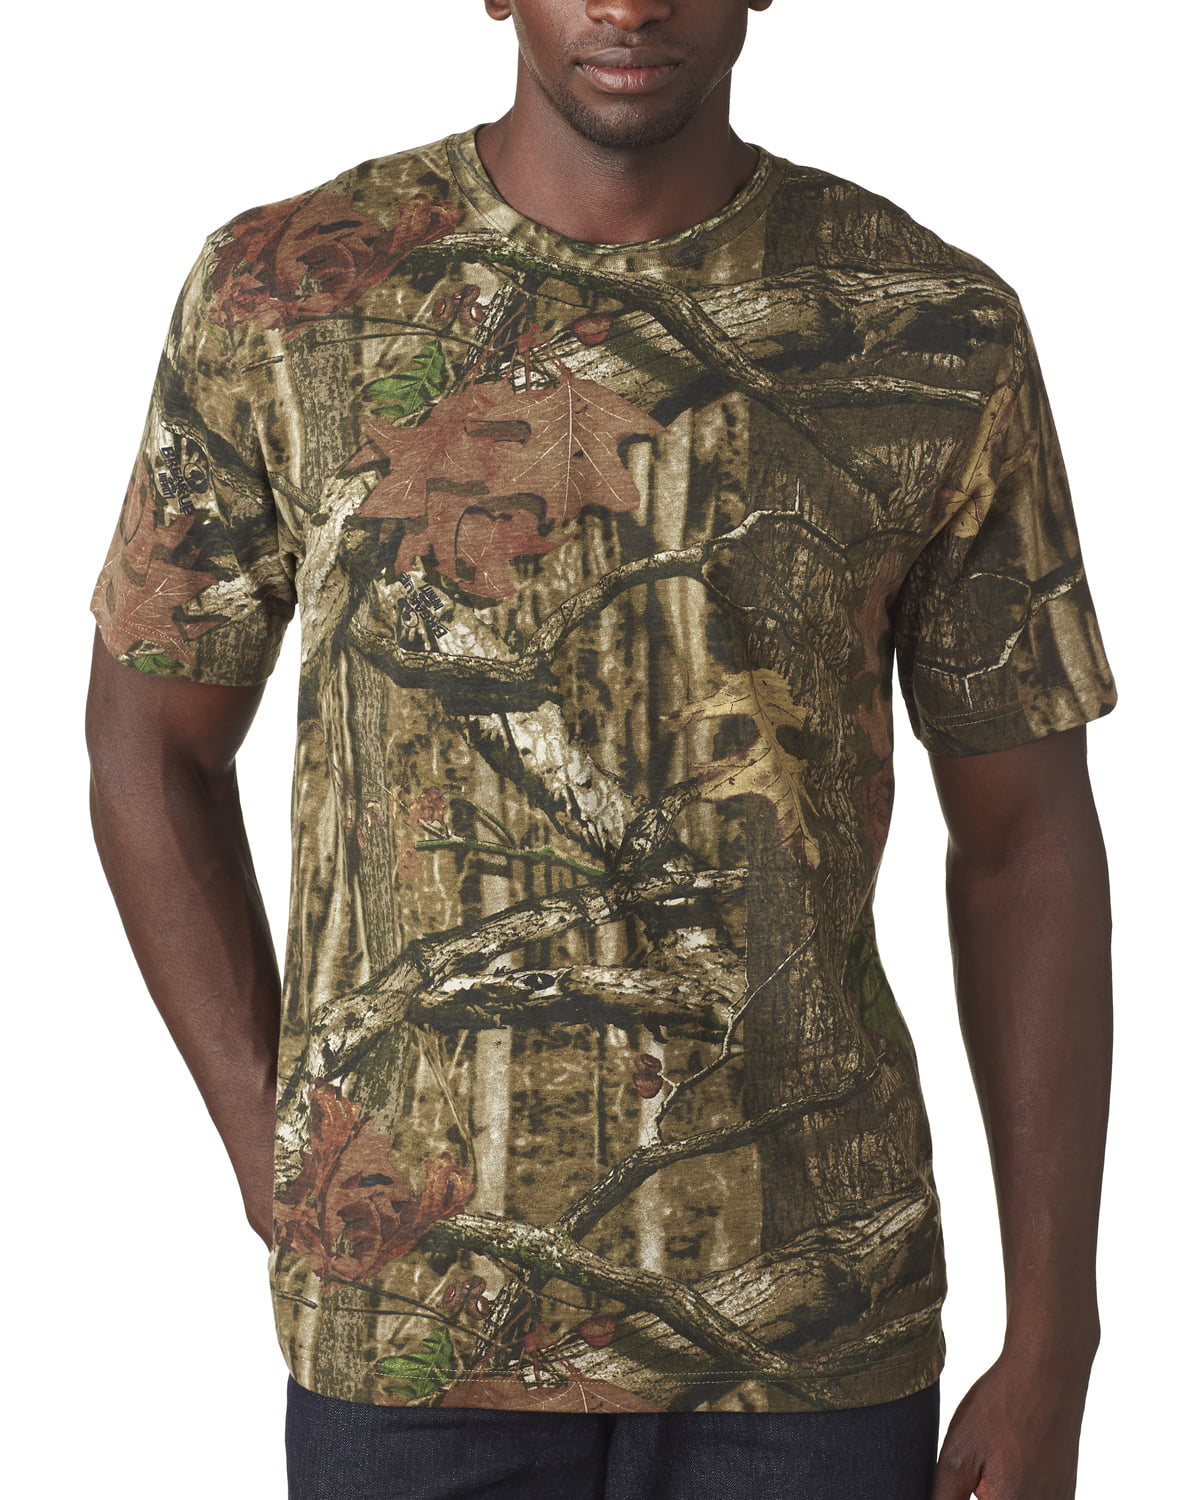 *NEW Men's Mossy Oak Breakup Infinity Hunting Camouflage Camo T-shirt Size XL 